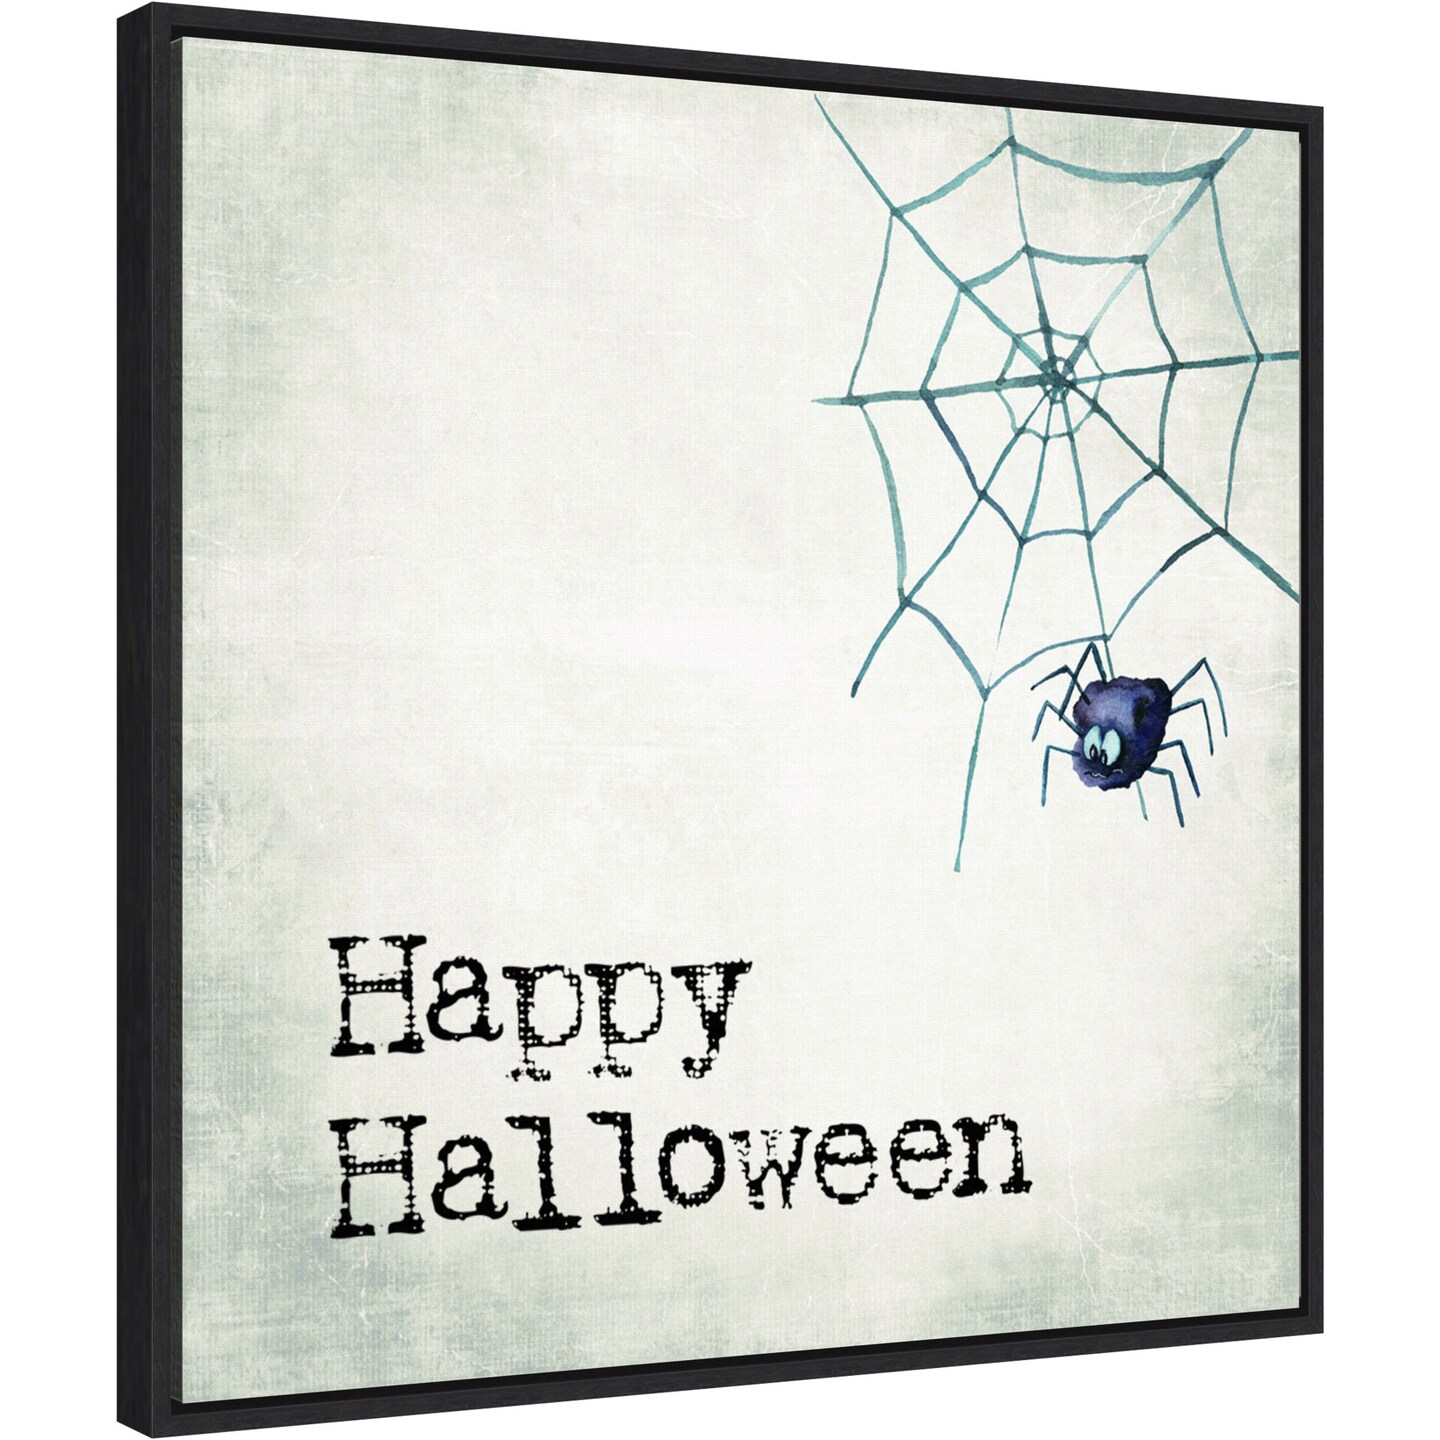 Happy Halloween Spider by Amanti Art Portfolio 22-in. W x 22-in. H. Canvas Wall Art Print Framed in Black